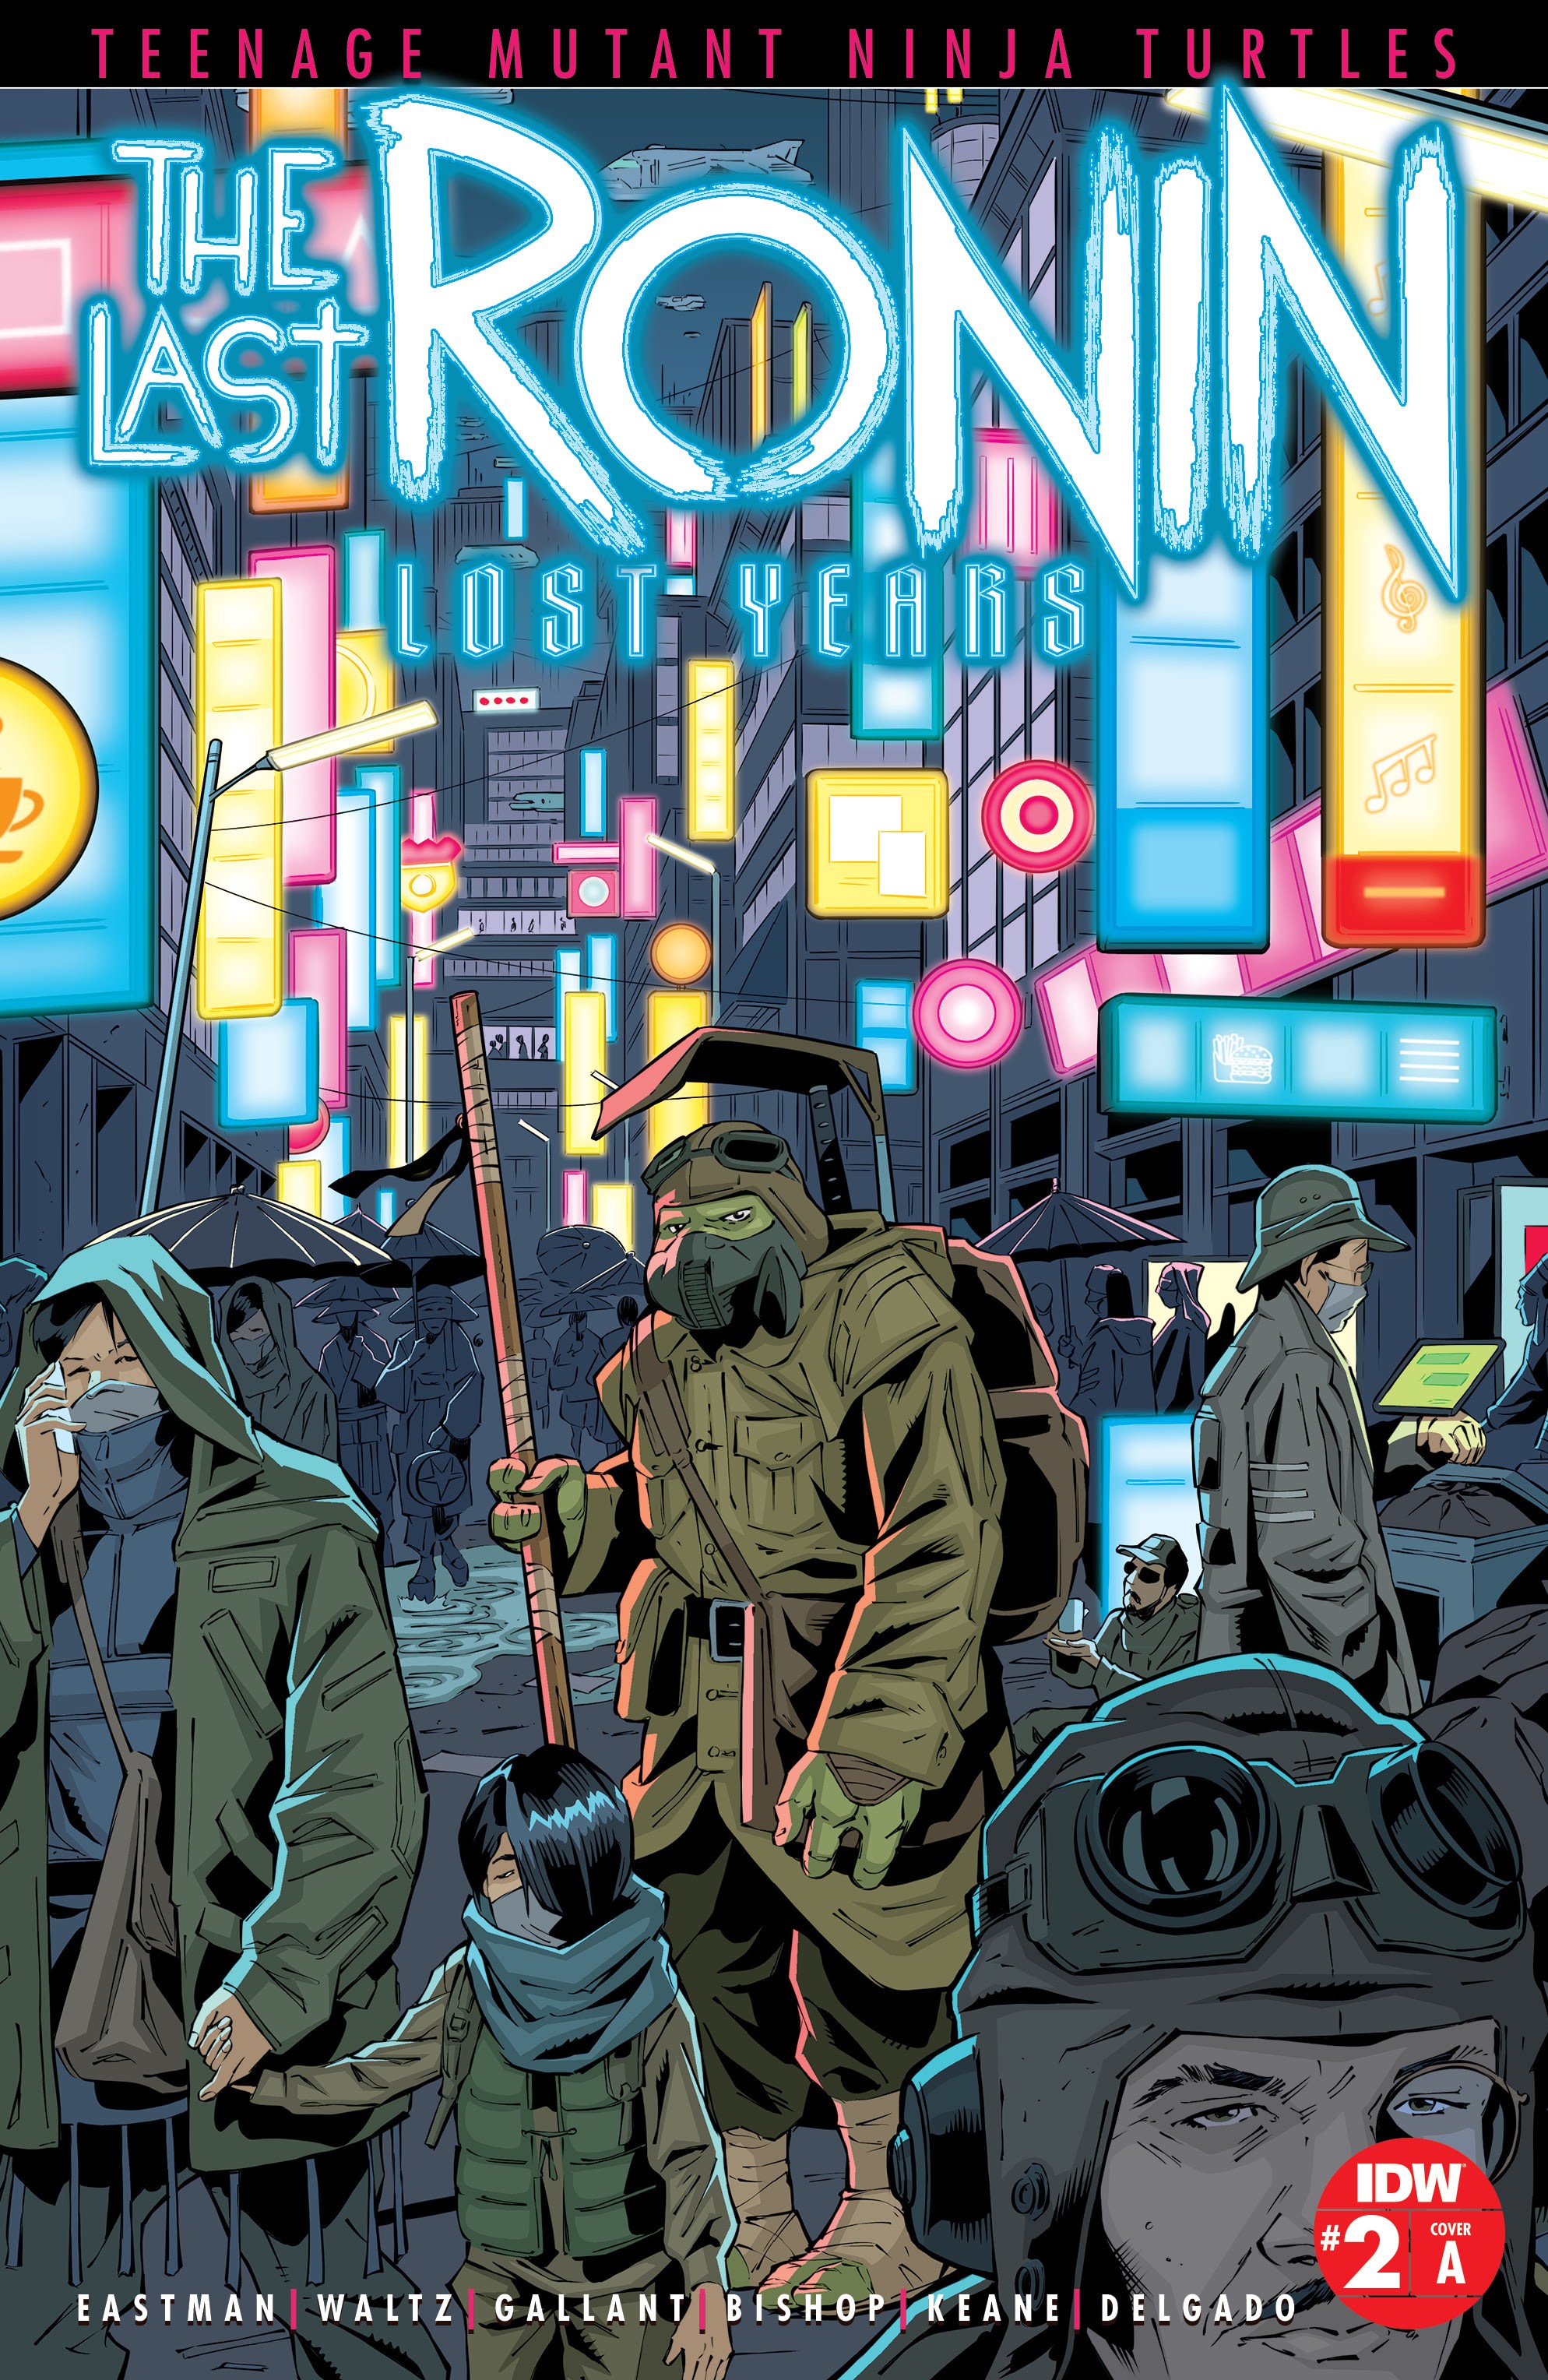 Read online Teenage Mutant Ninja Turtles: The Last Ronin - The Lost Years comic -  Issue #2 - 1